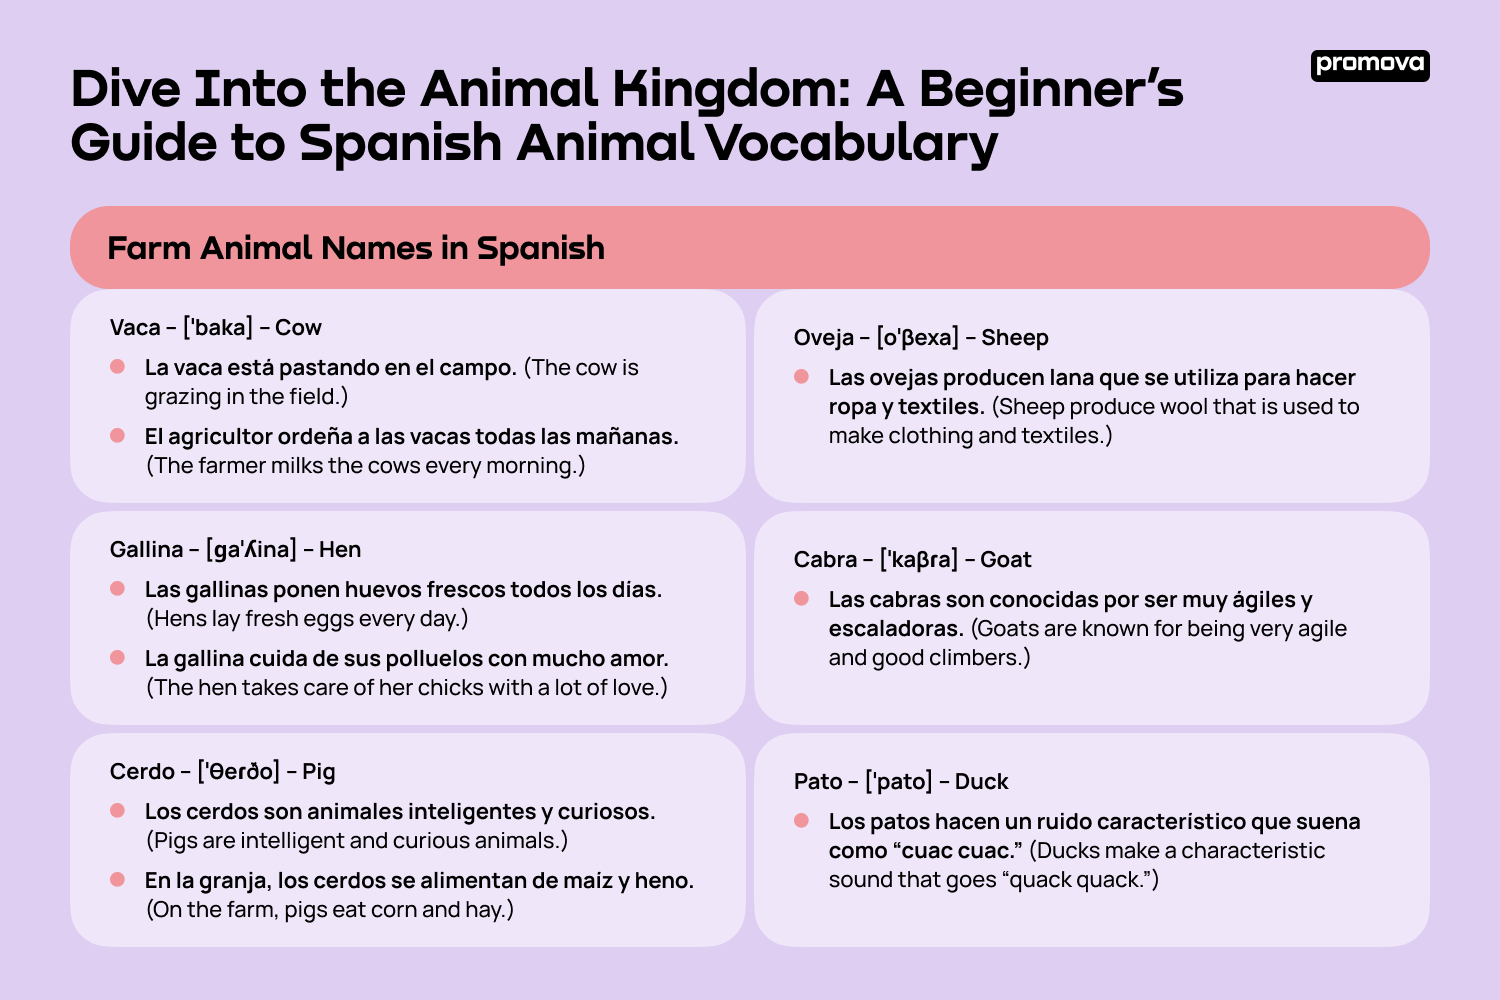 Discover Spanish Animal Vocabulary